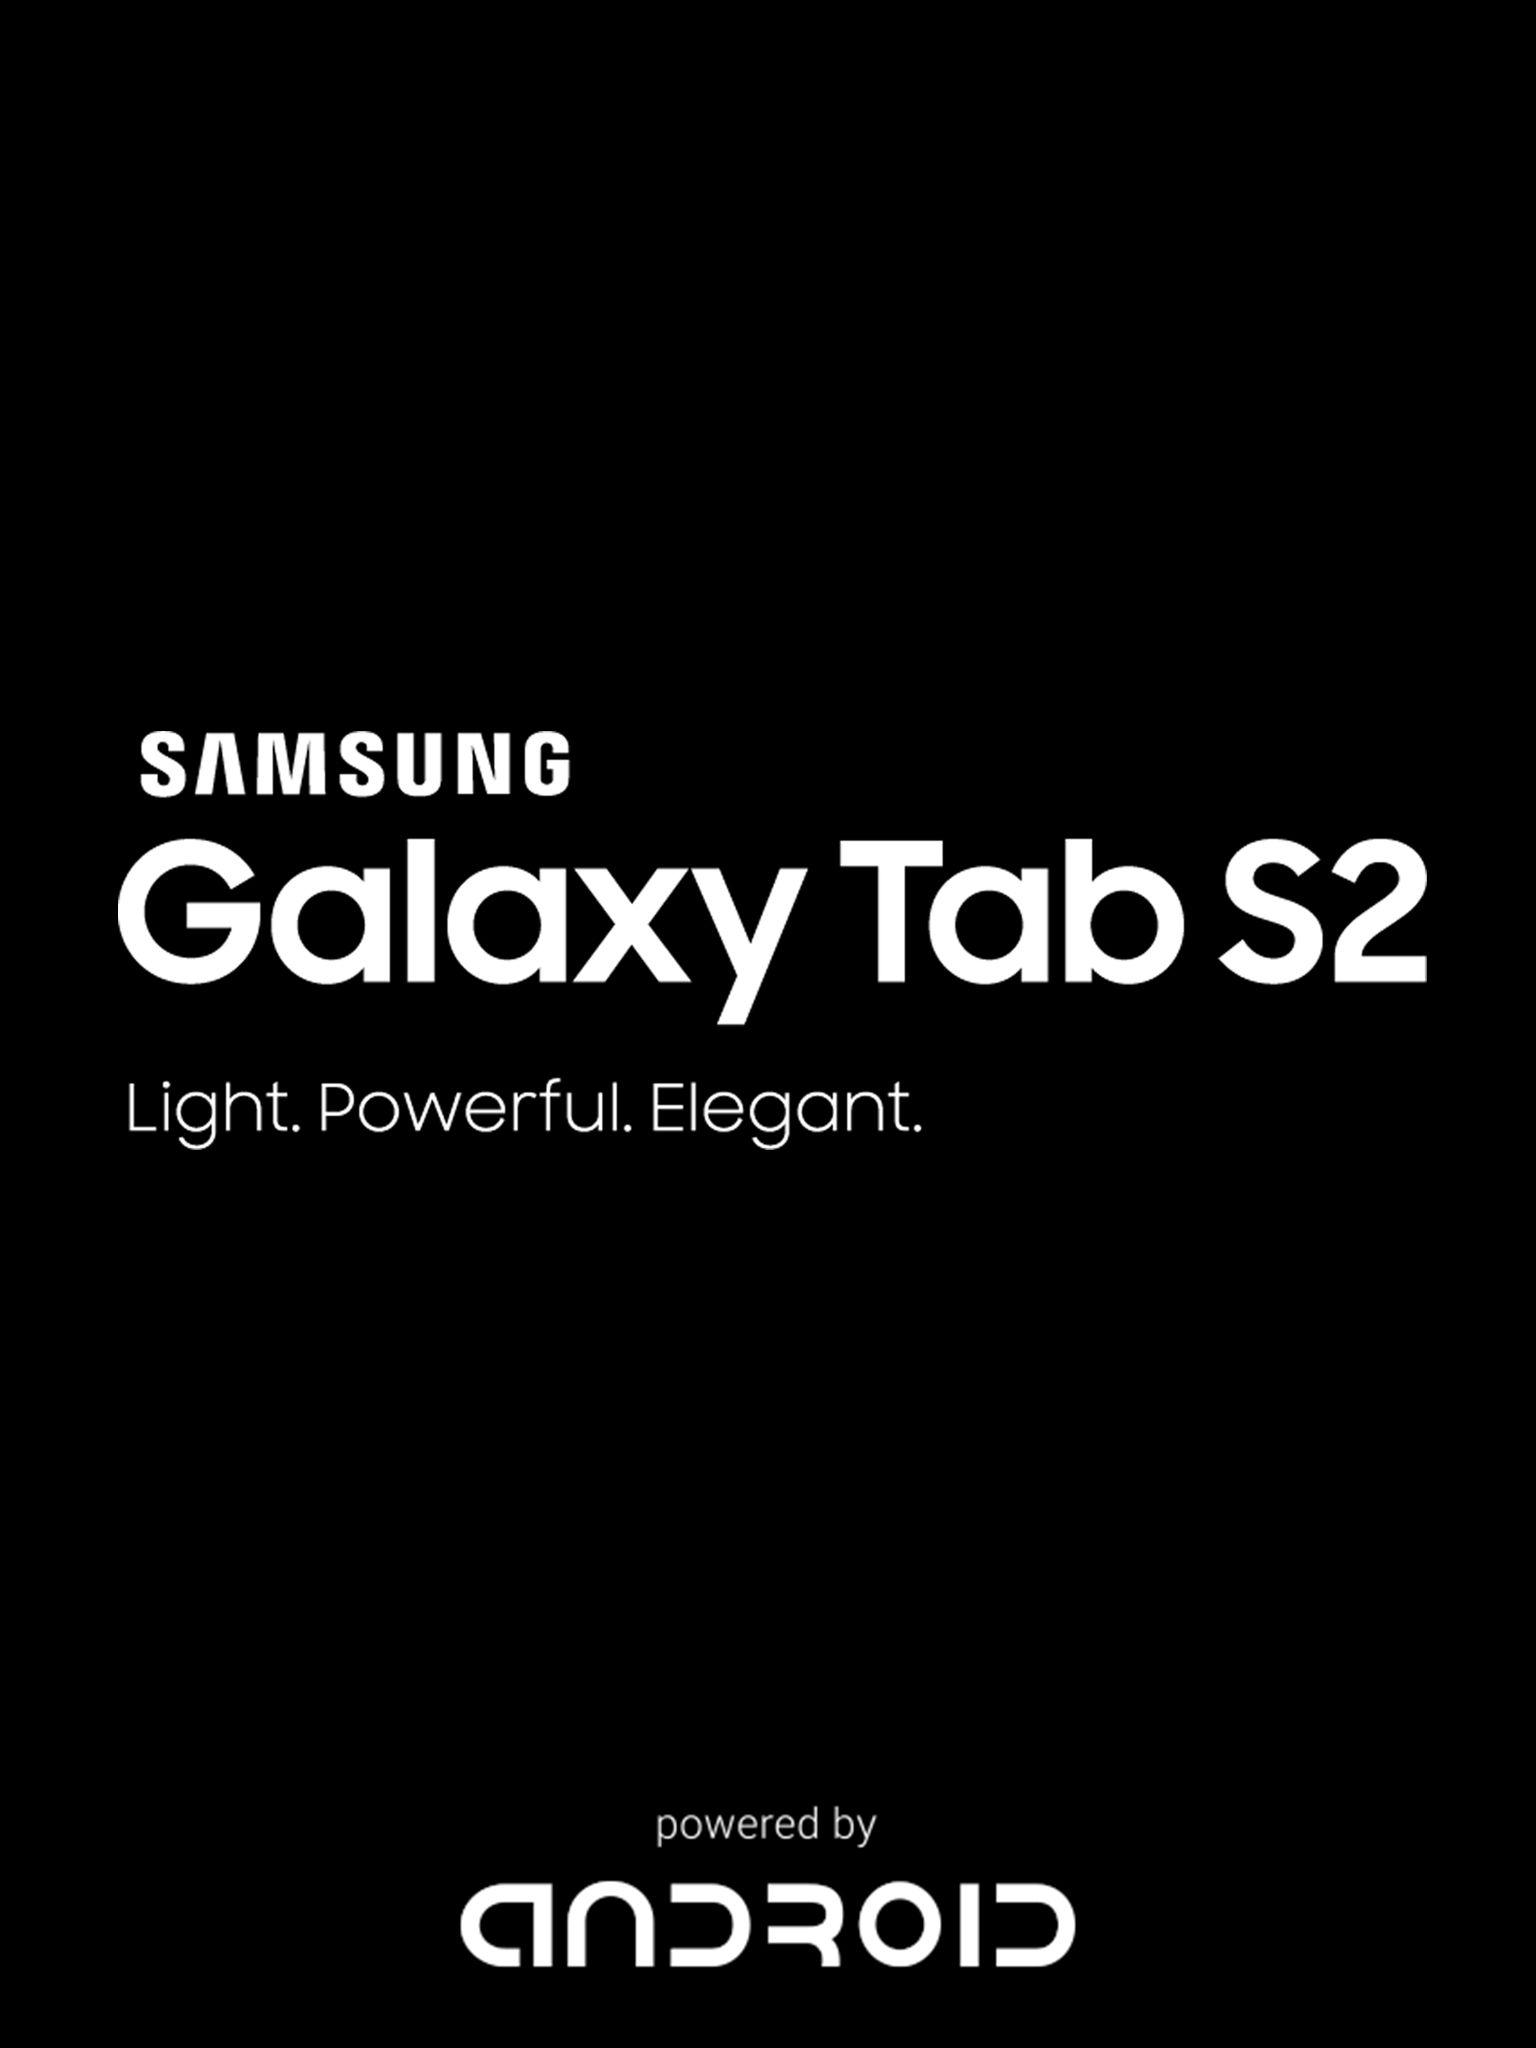 Samsung Android Logo - Boot screen customization | SEAP